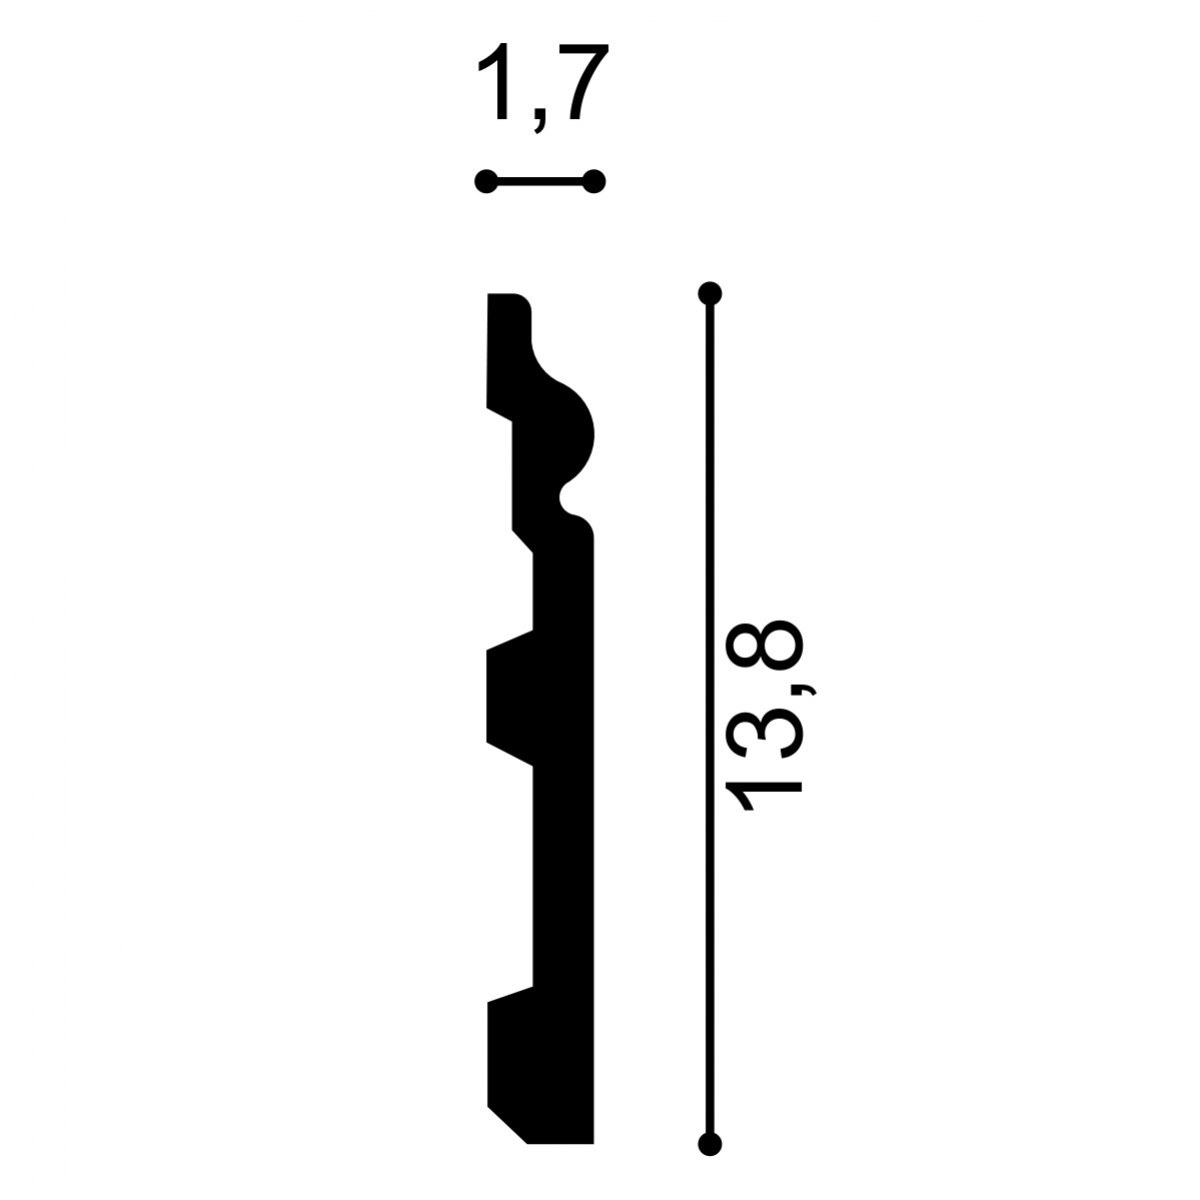 Plinta S15F, Dimensiuni: 200 X 13.8 X 1.7 cm, Plinte decorative 